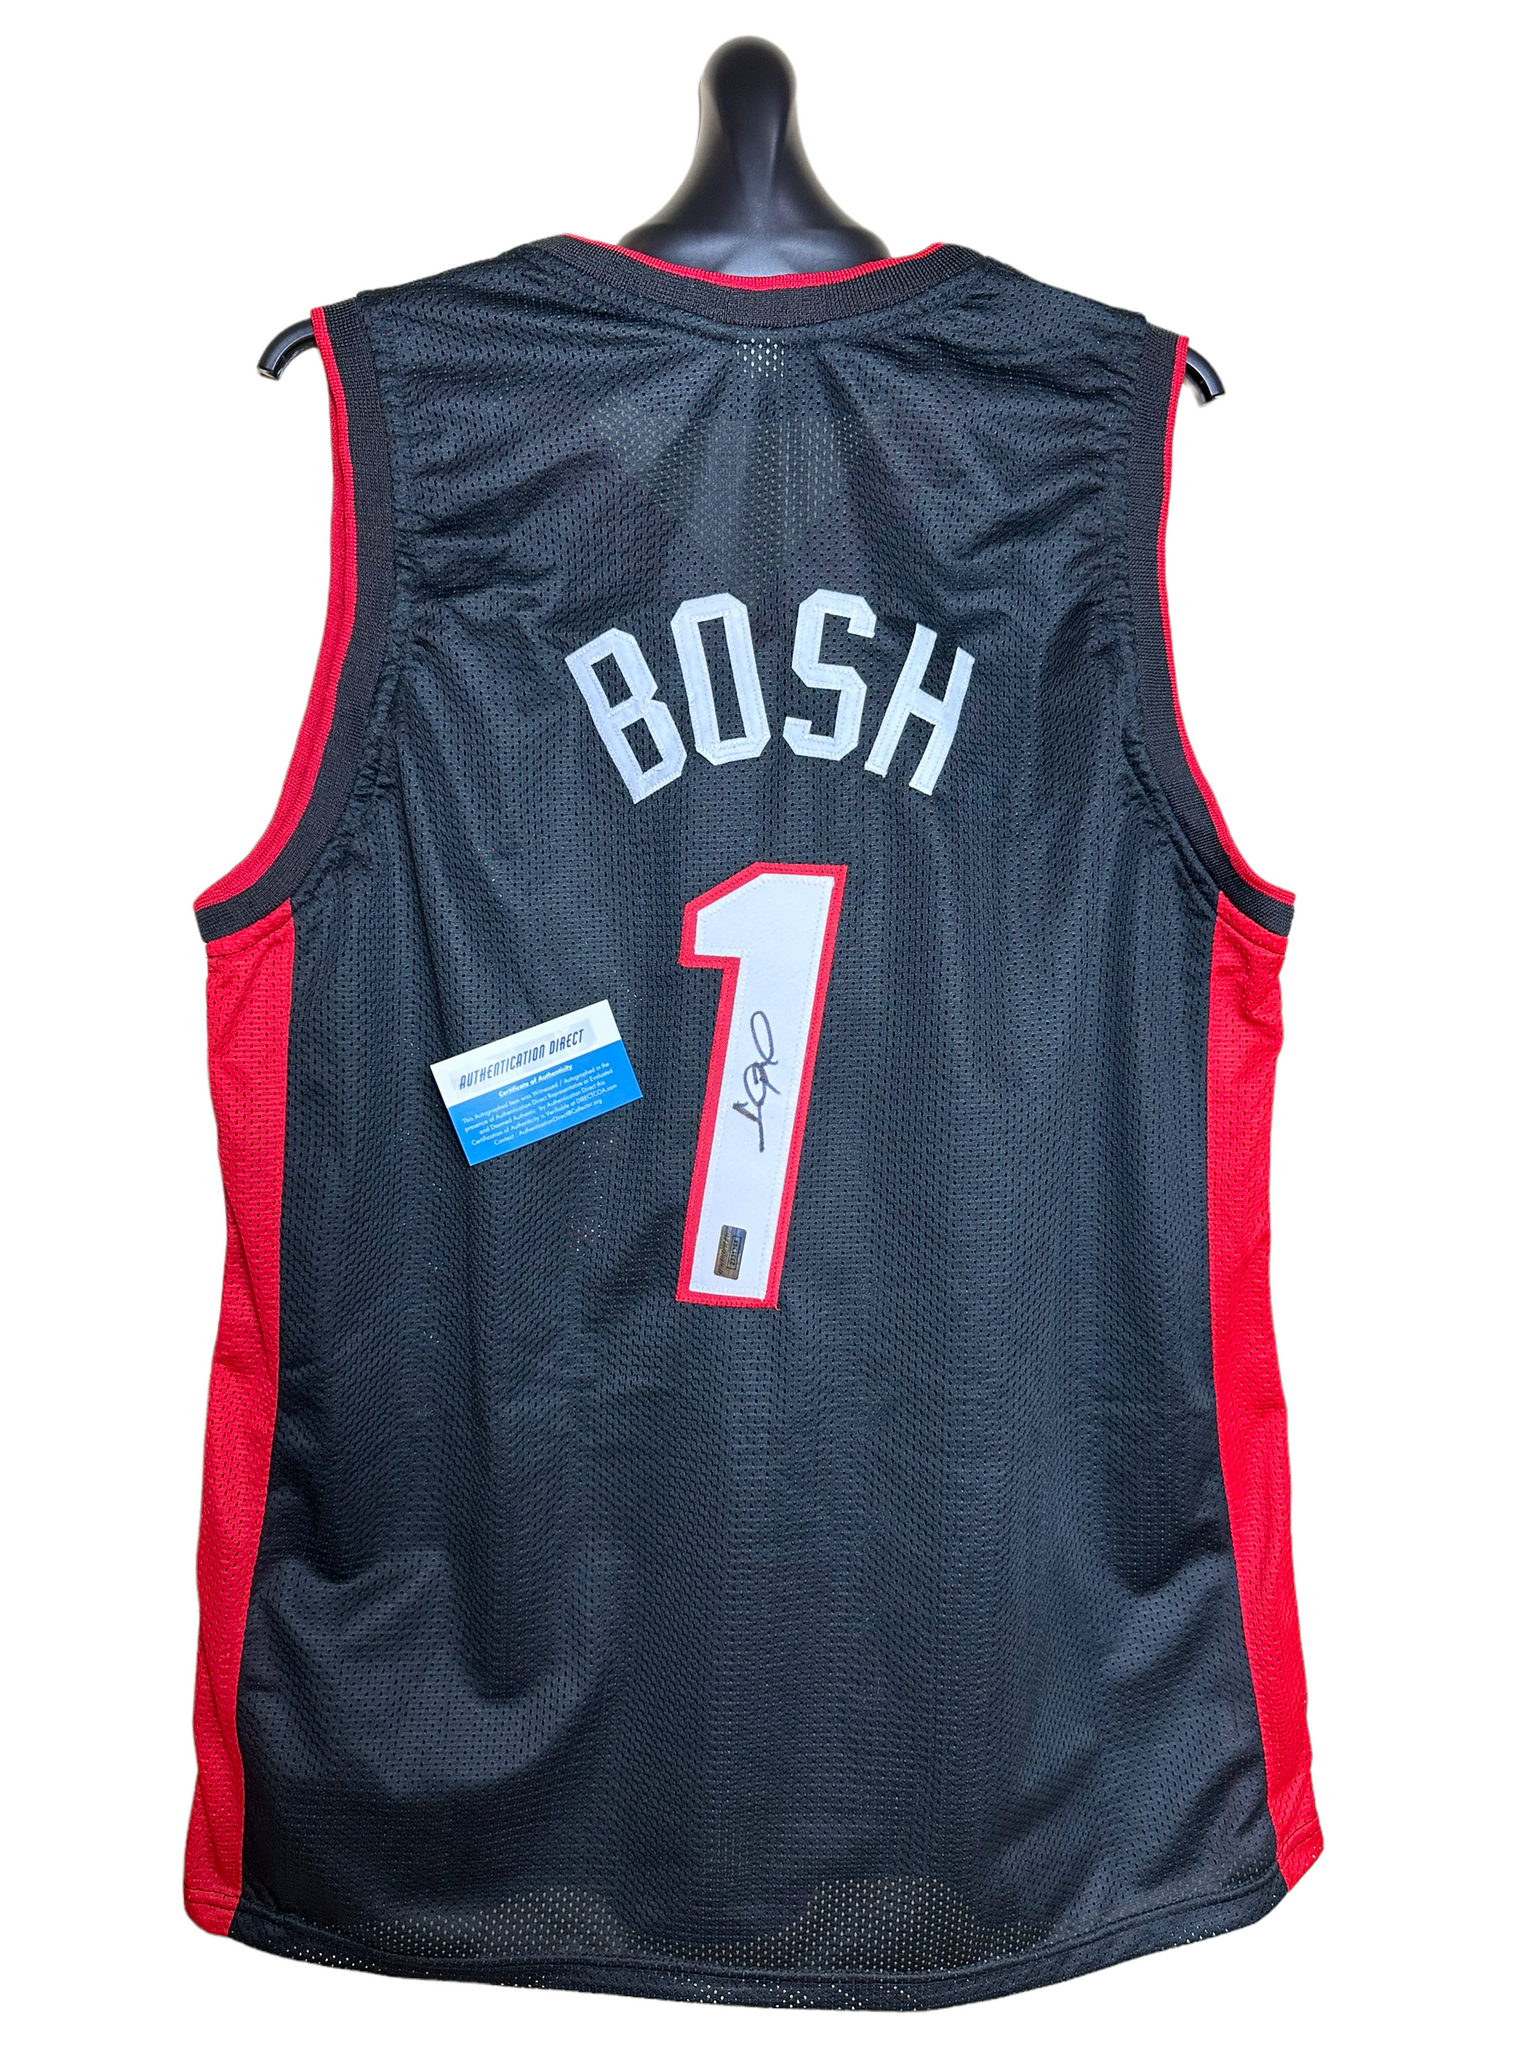 Chris Bosh Hand Signed Miami Heat Home Court Jersey w/COA